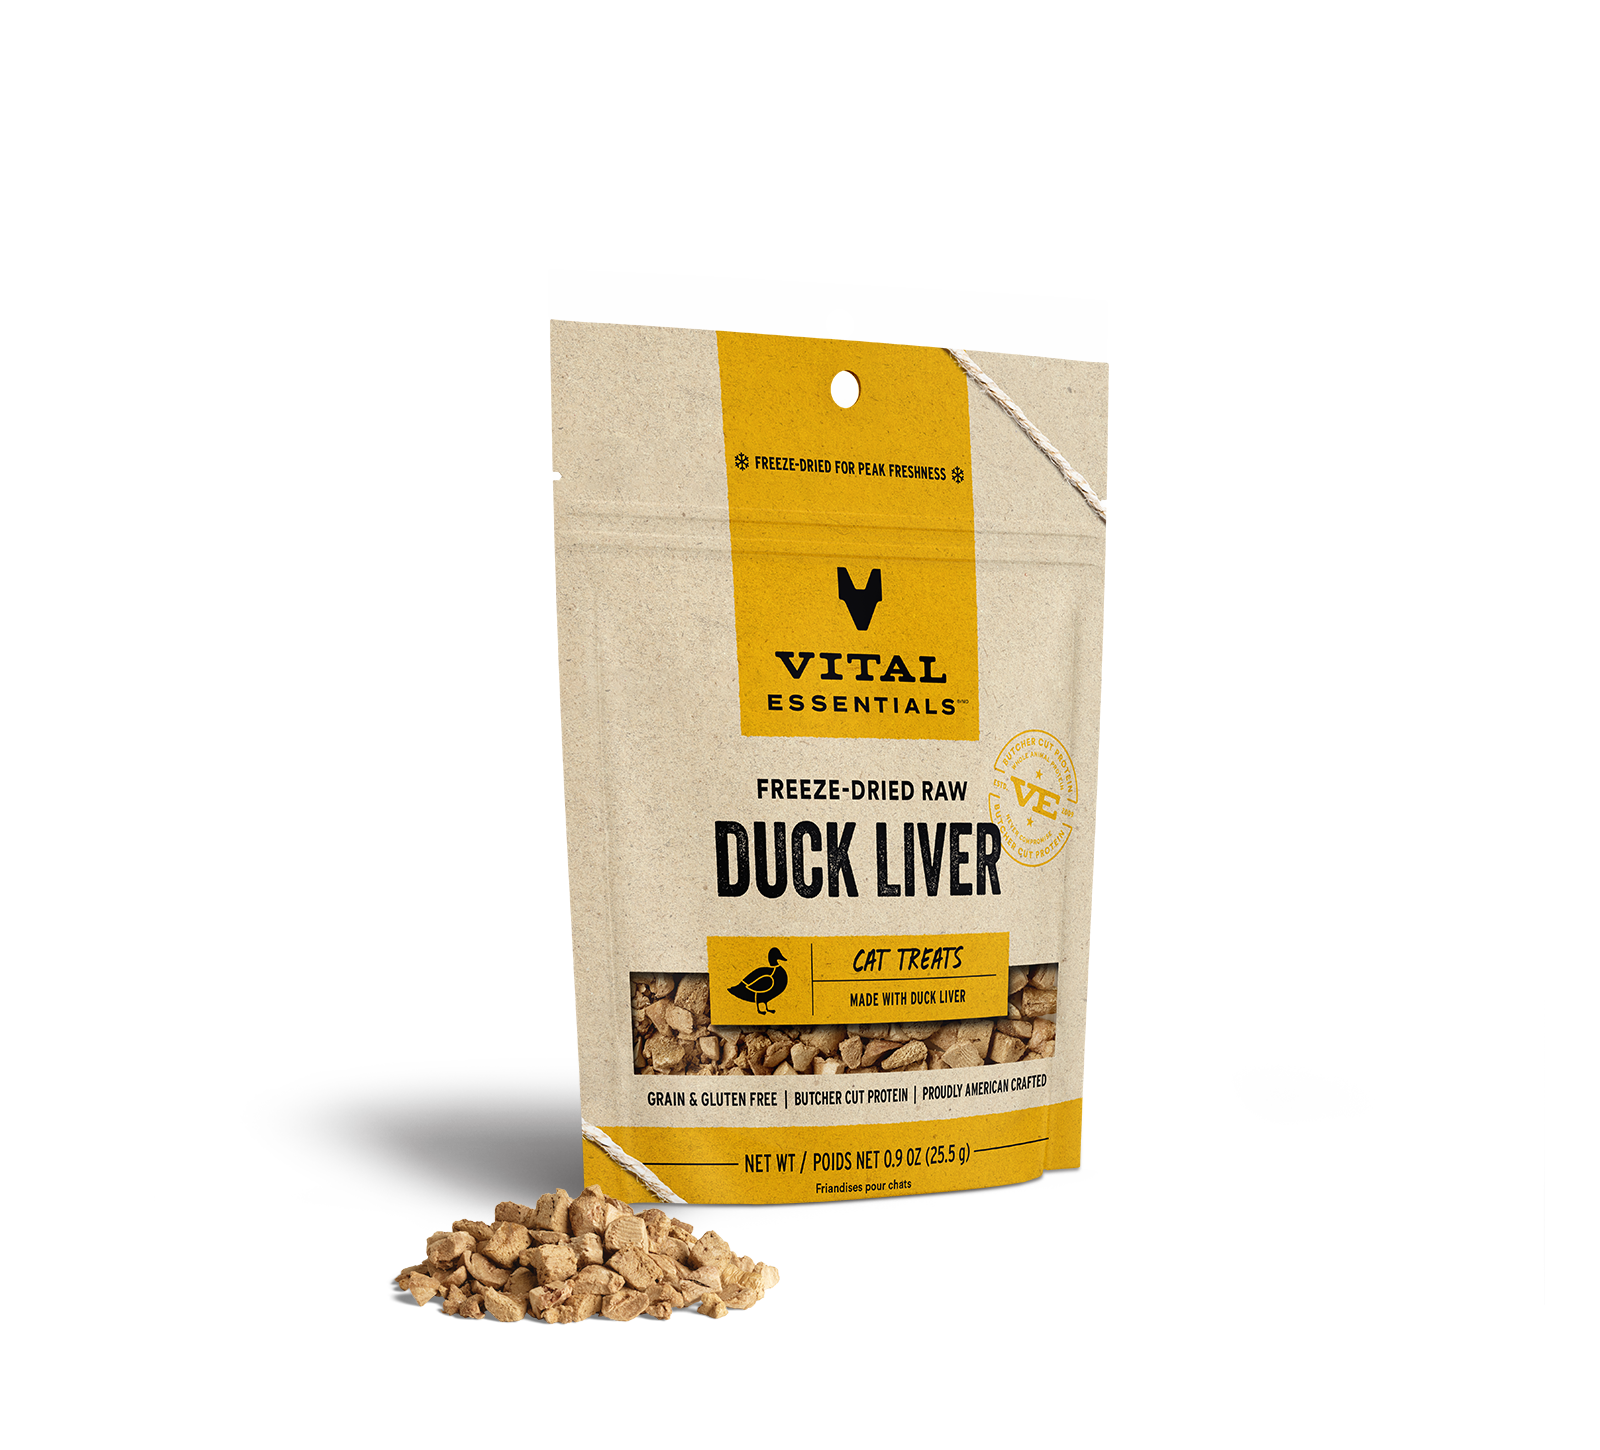 Vital Essentials Freeze-Dried Duck Liver Cat Treats, 0.9 oz - Health/First Aid